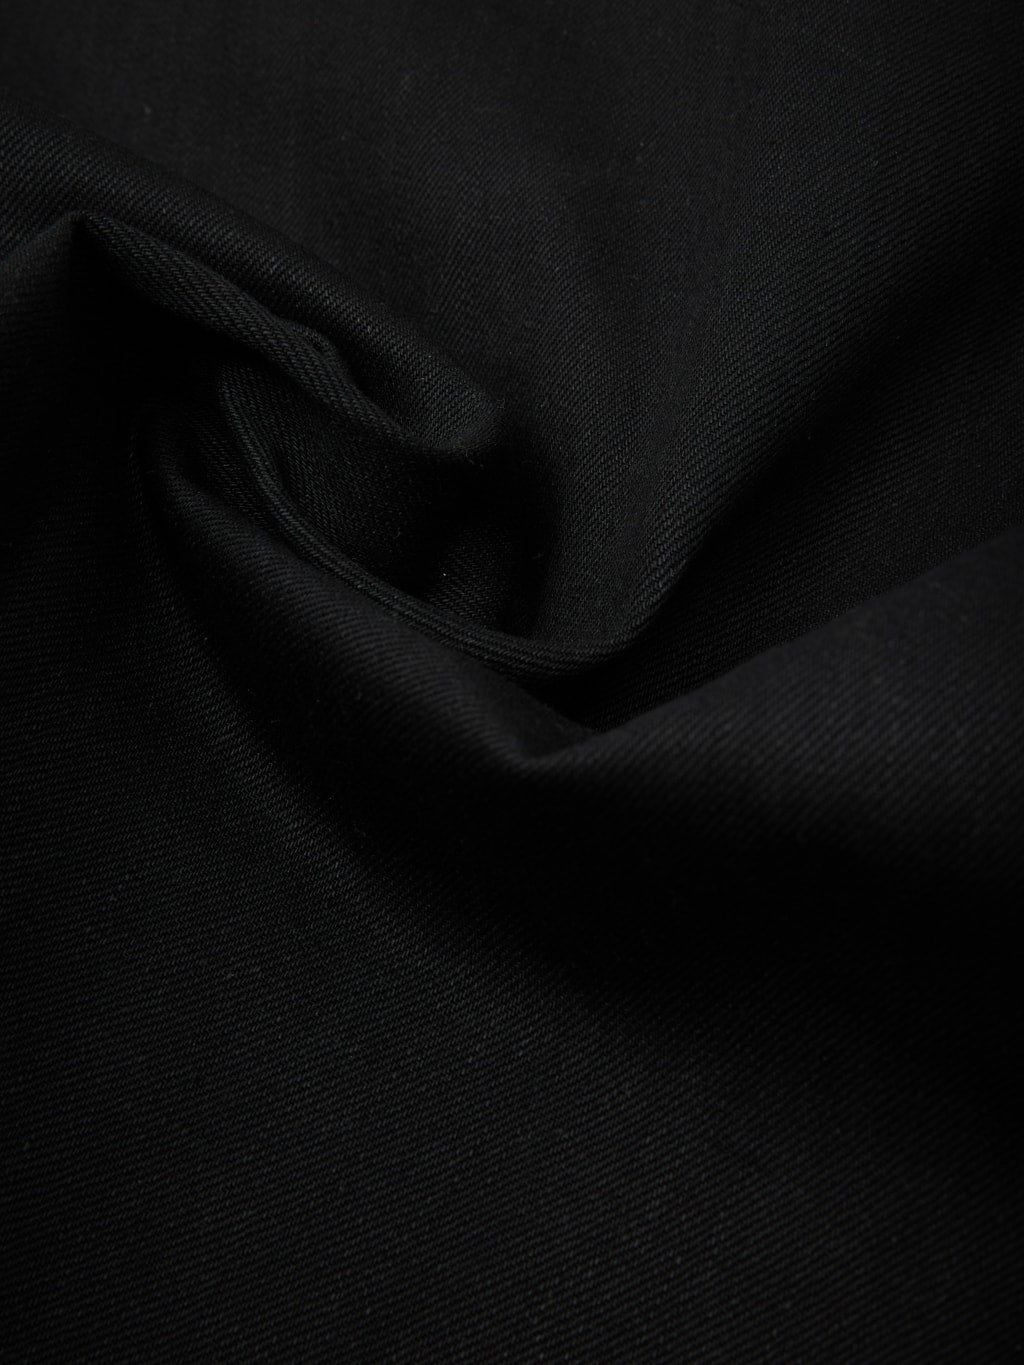 3sixteen type III denim jacket double black cotton fabric